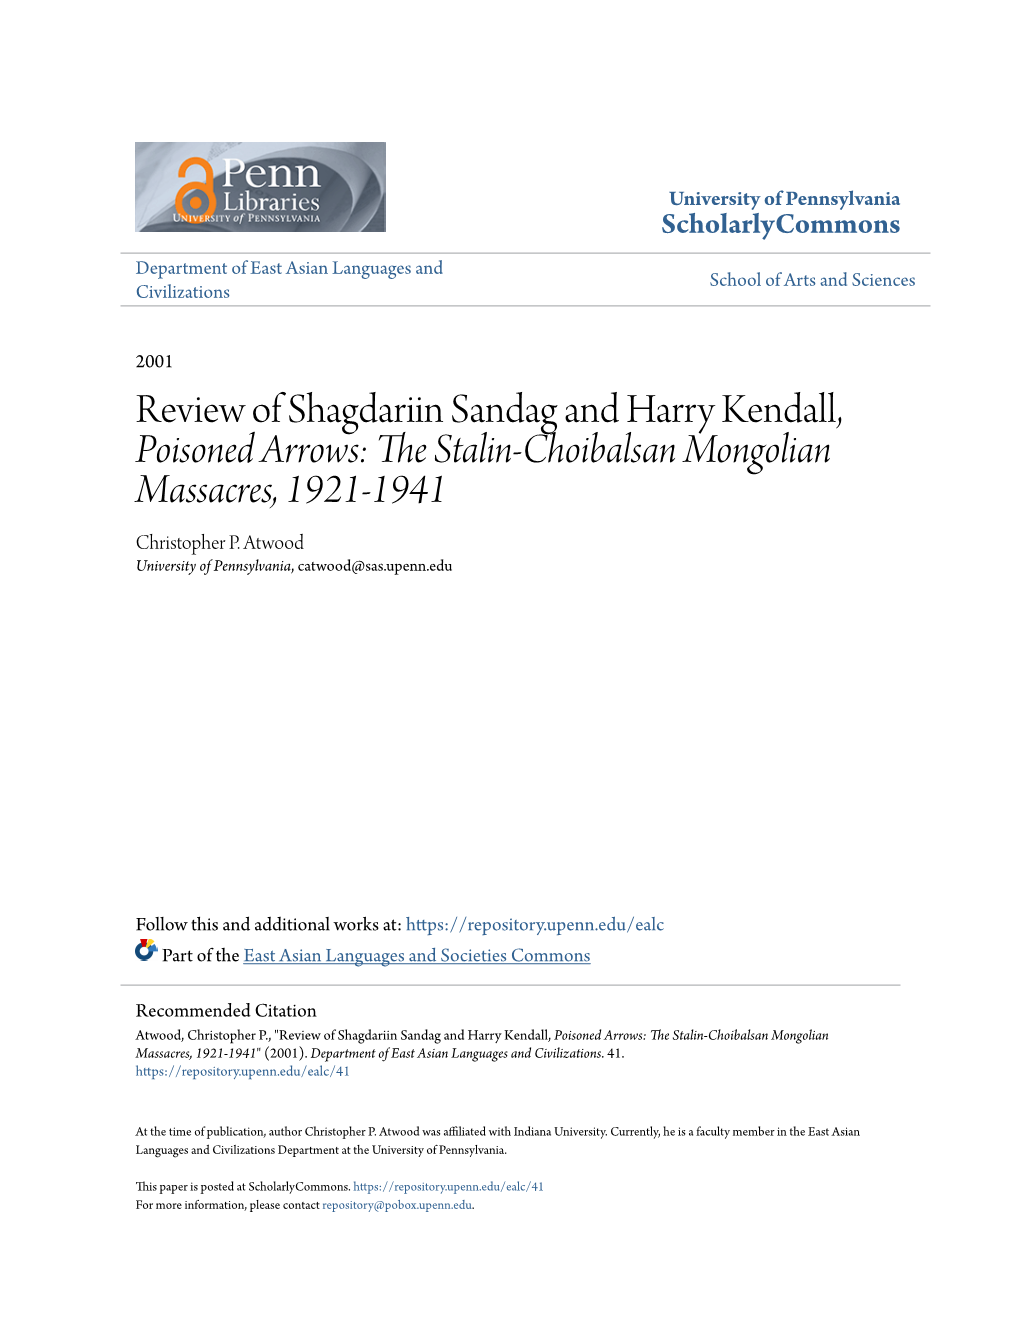 Review of Shagdariin Sandag and Harry Kendall, Poisoned Arrows: the Stalin-Choibalsan Mongolian Massacres, 1921-1941 Christopher P